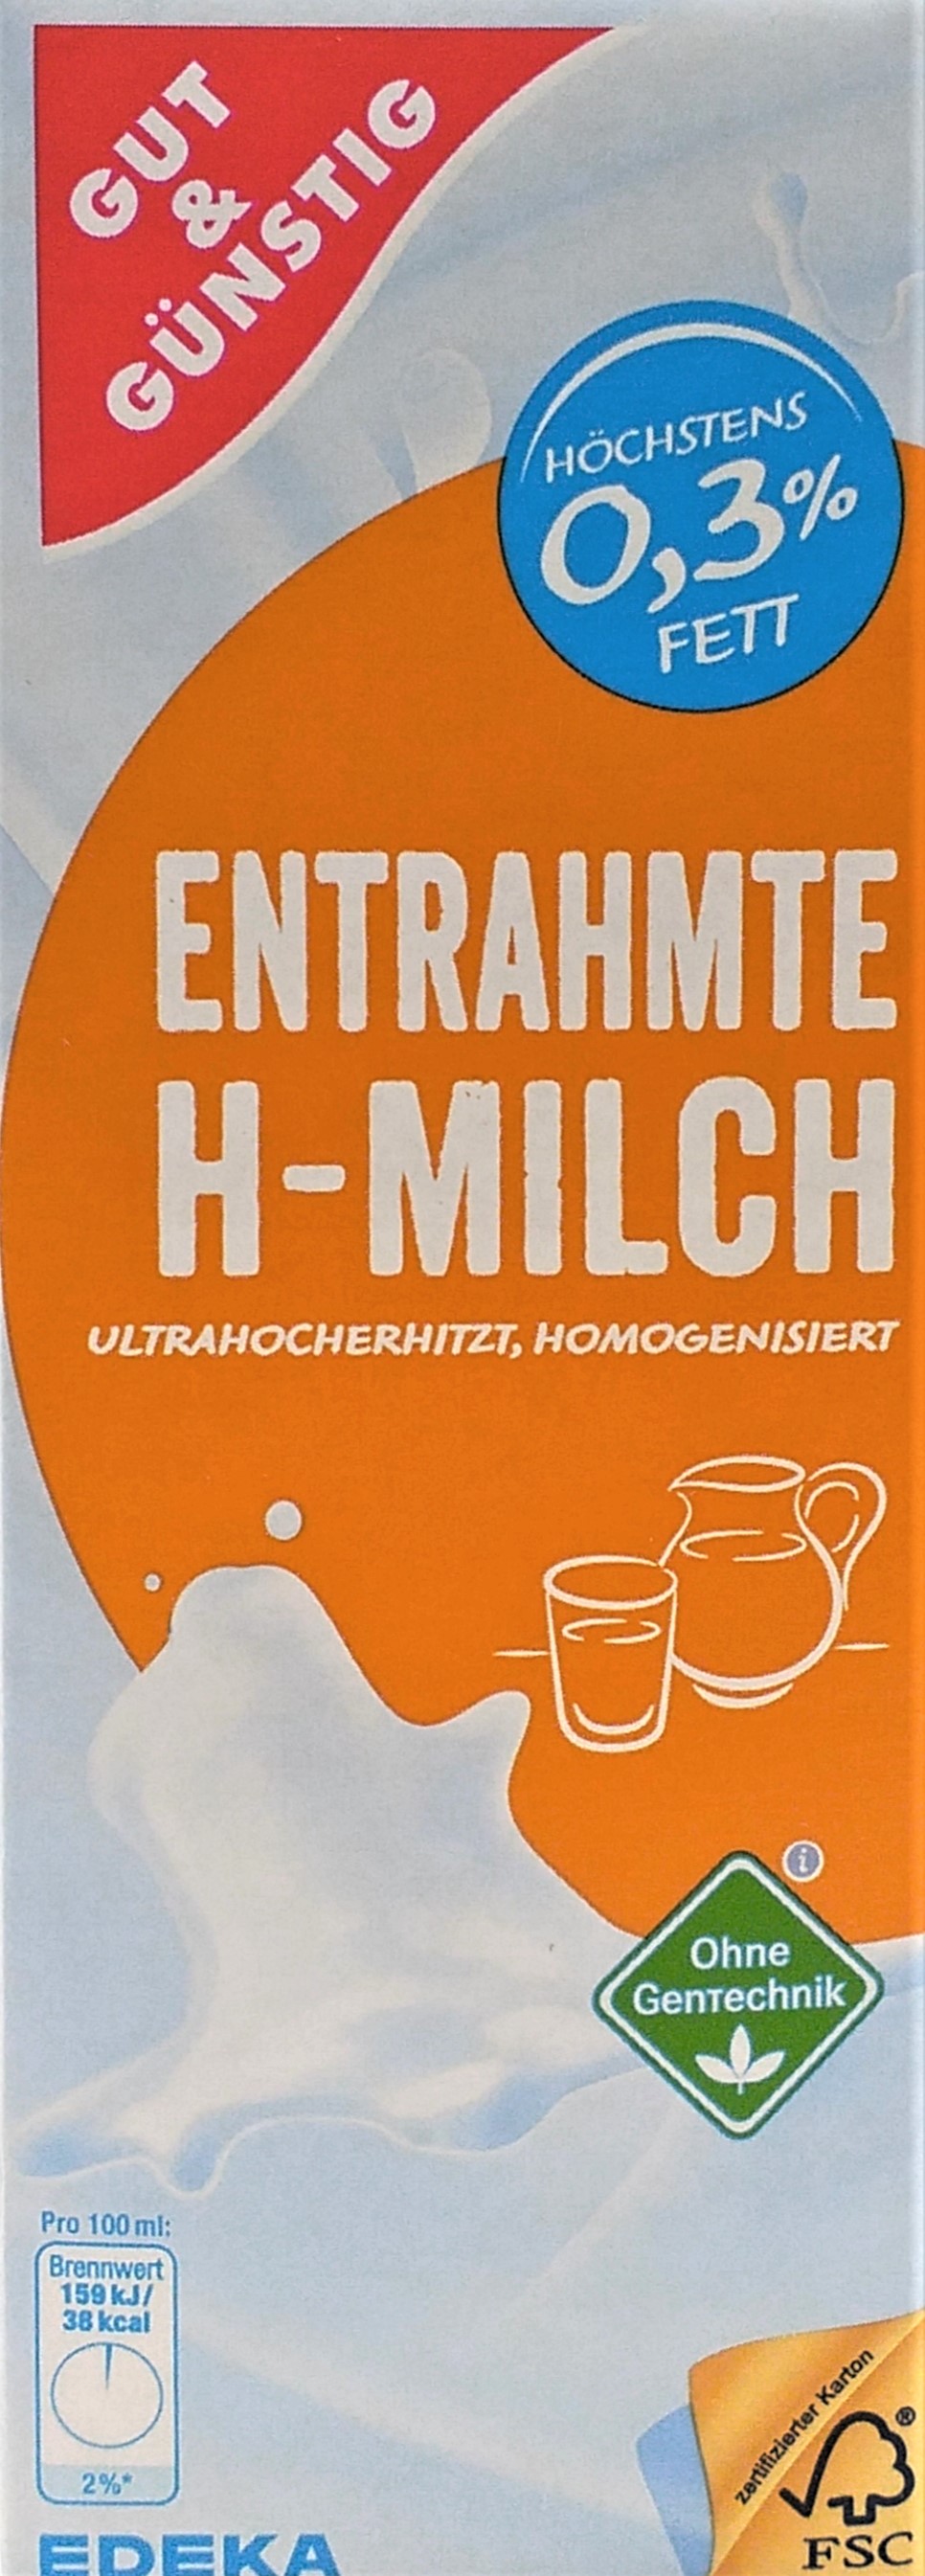 G&G H-Milch 0,3% Fett 1l